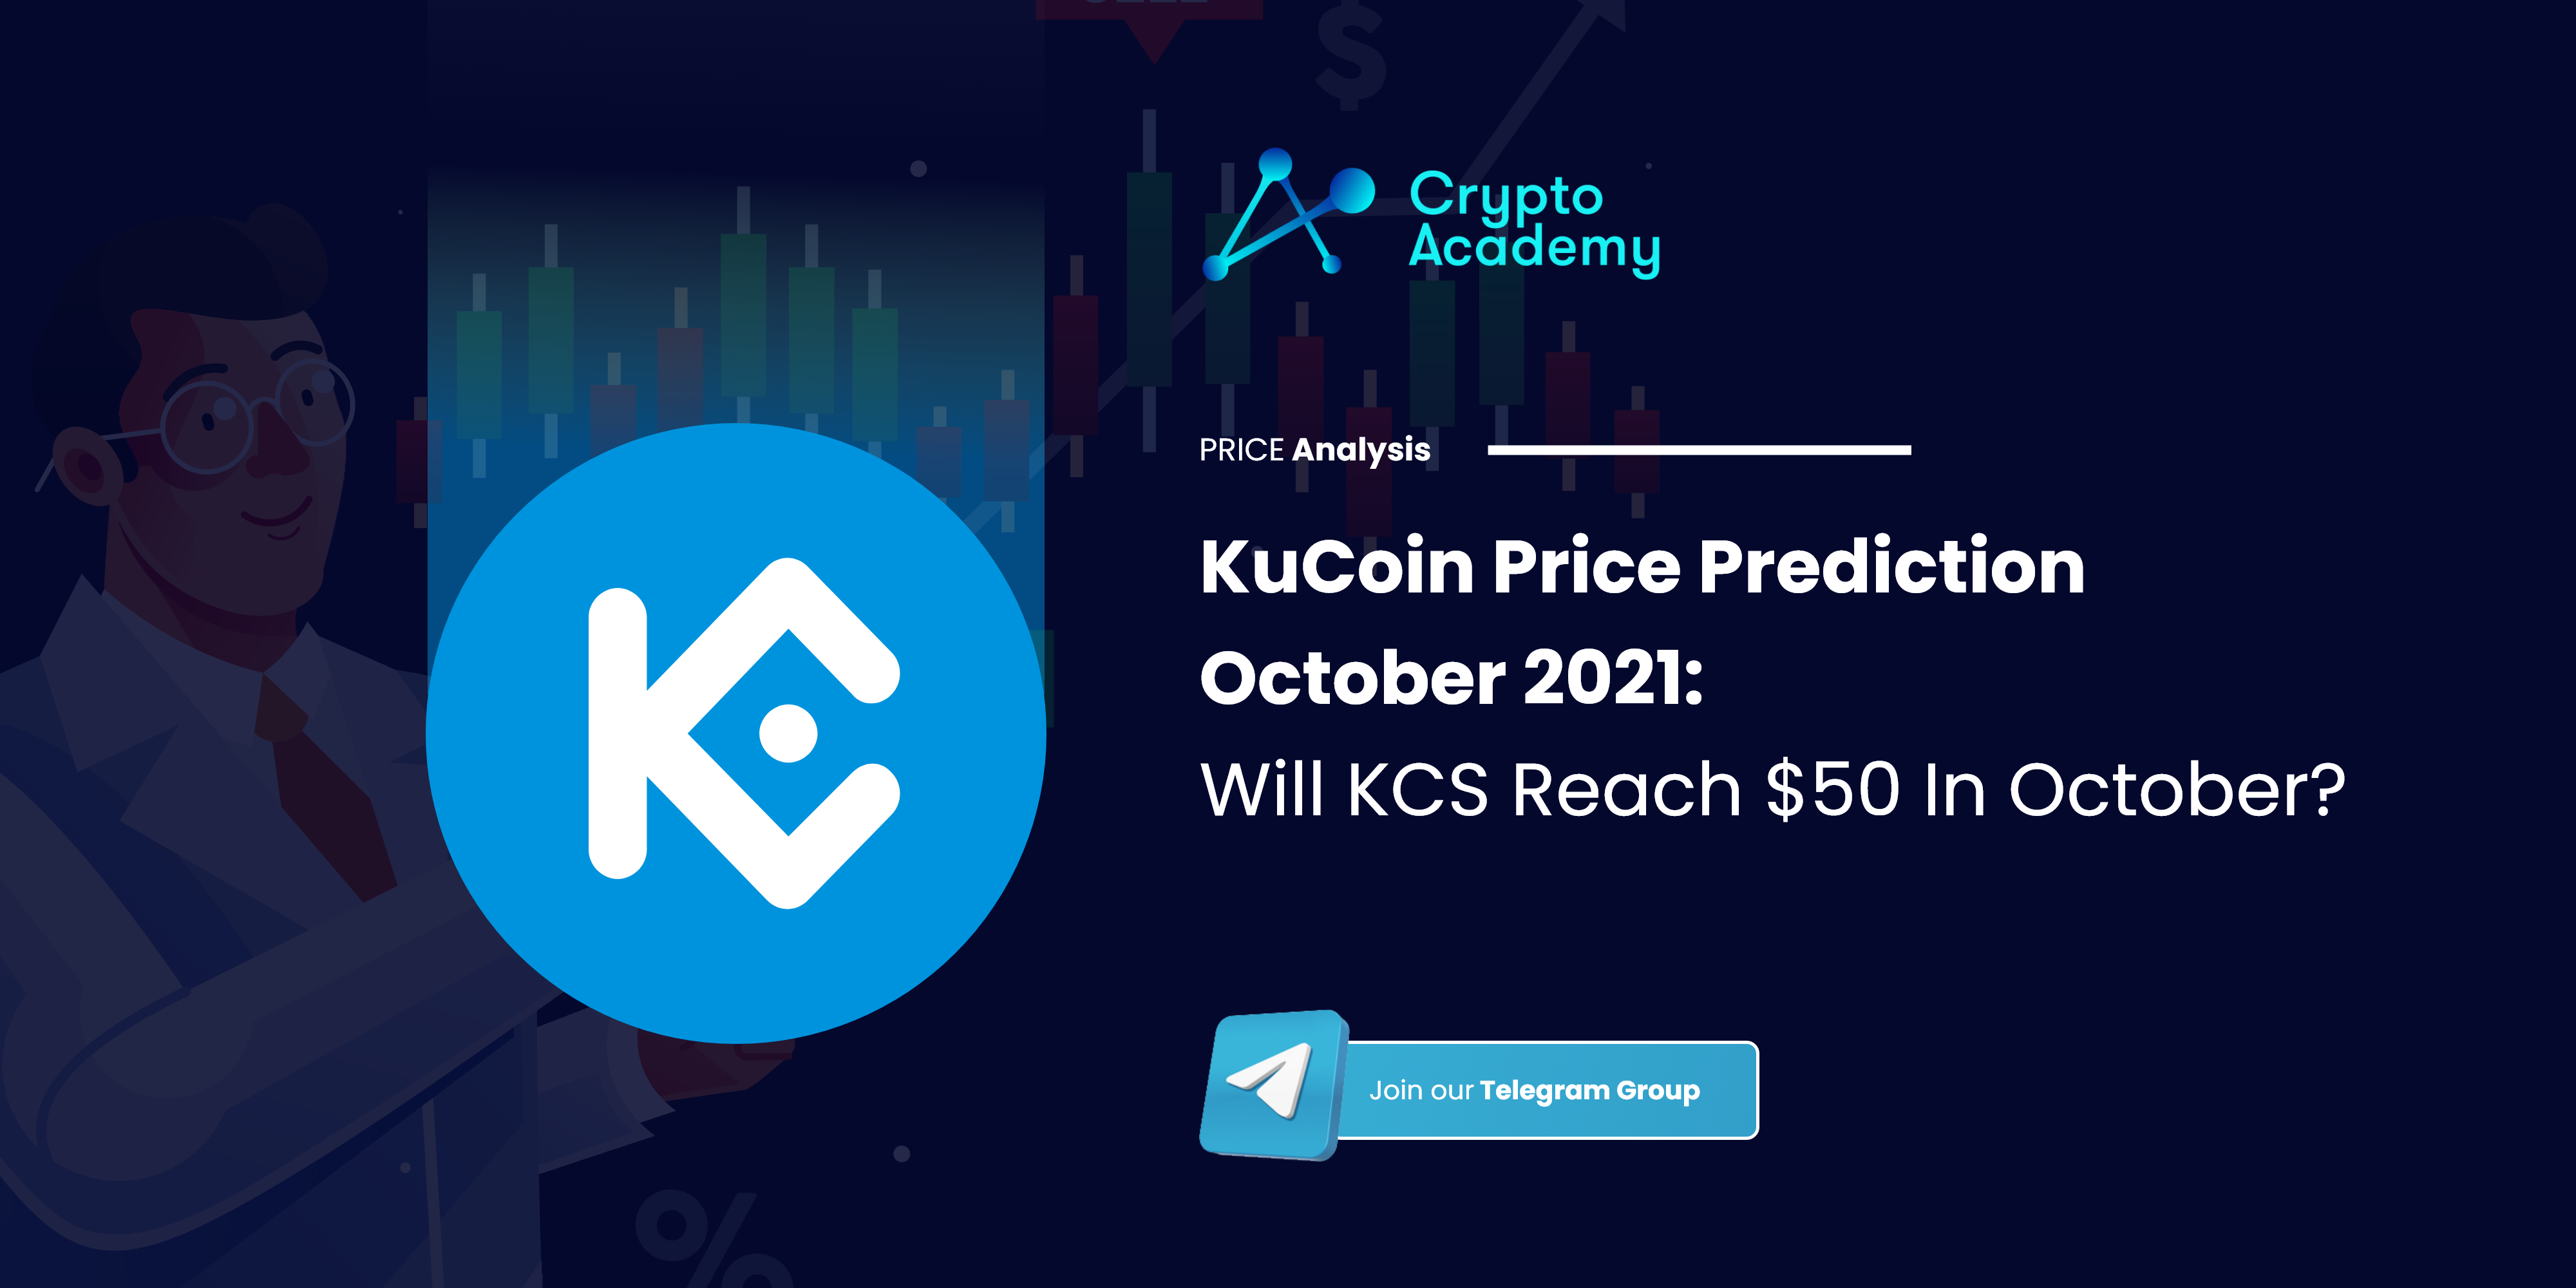 KuCoin Price Prediction October 2021: Will KCS Reach $50 In October